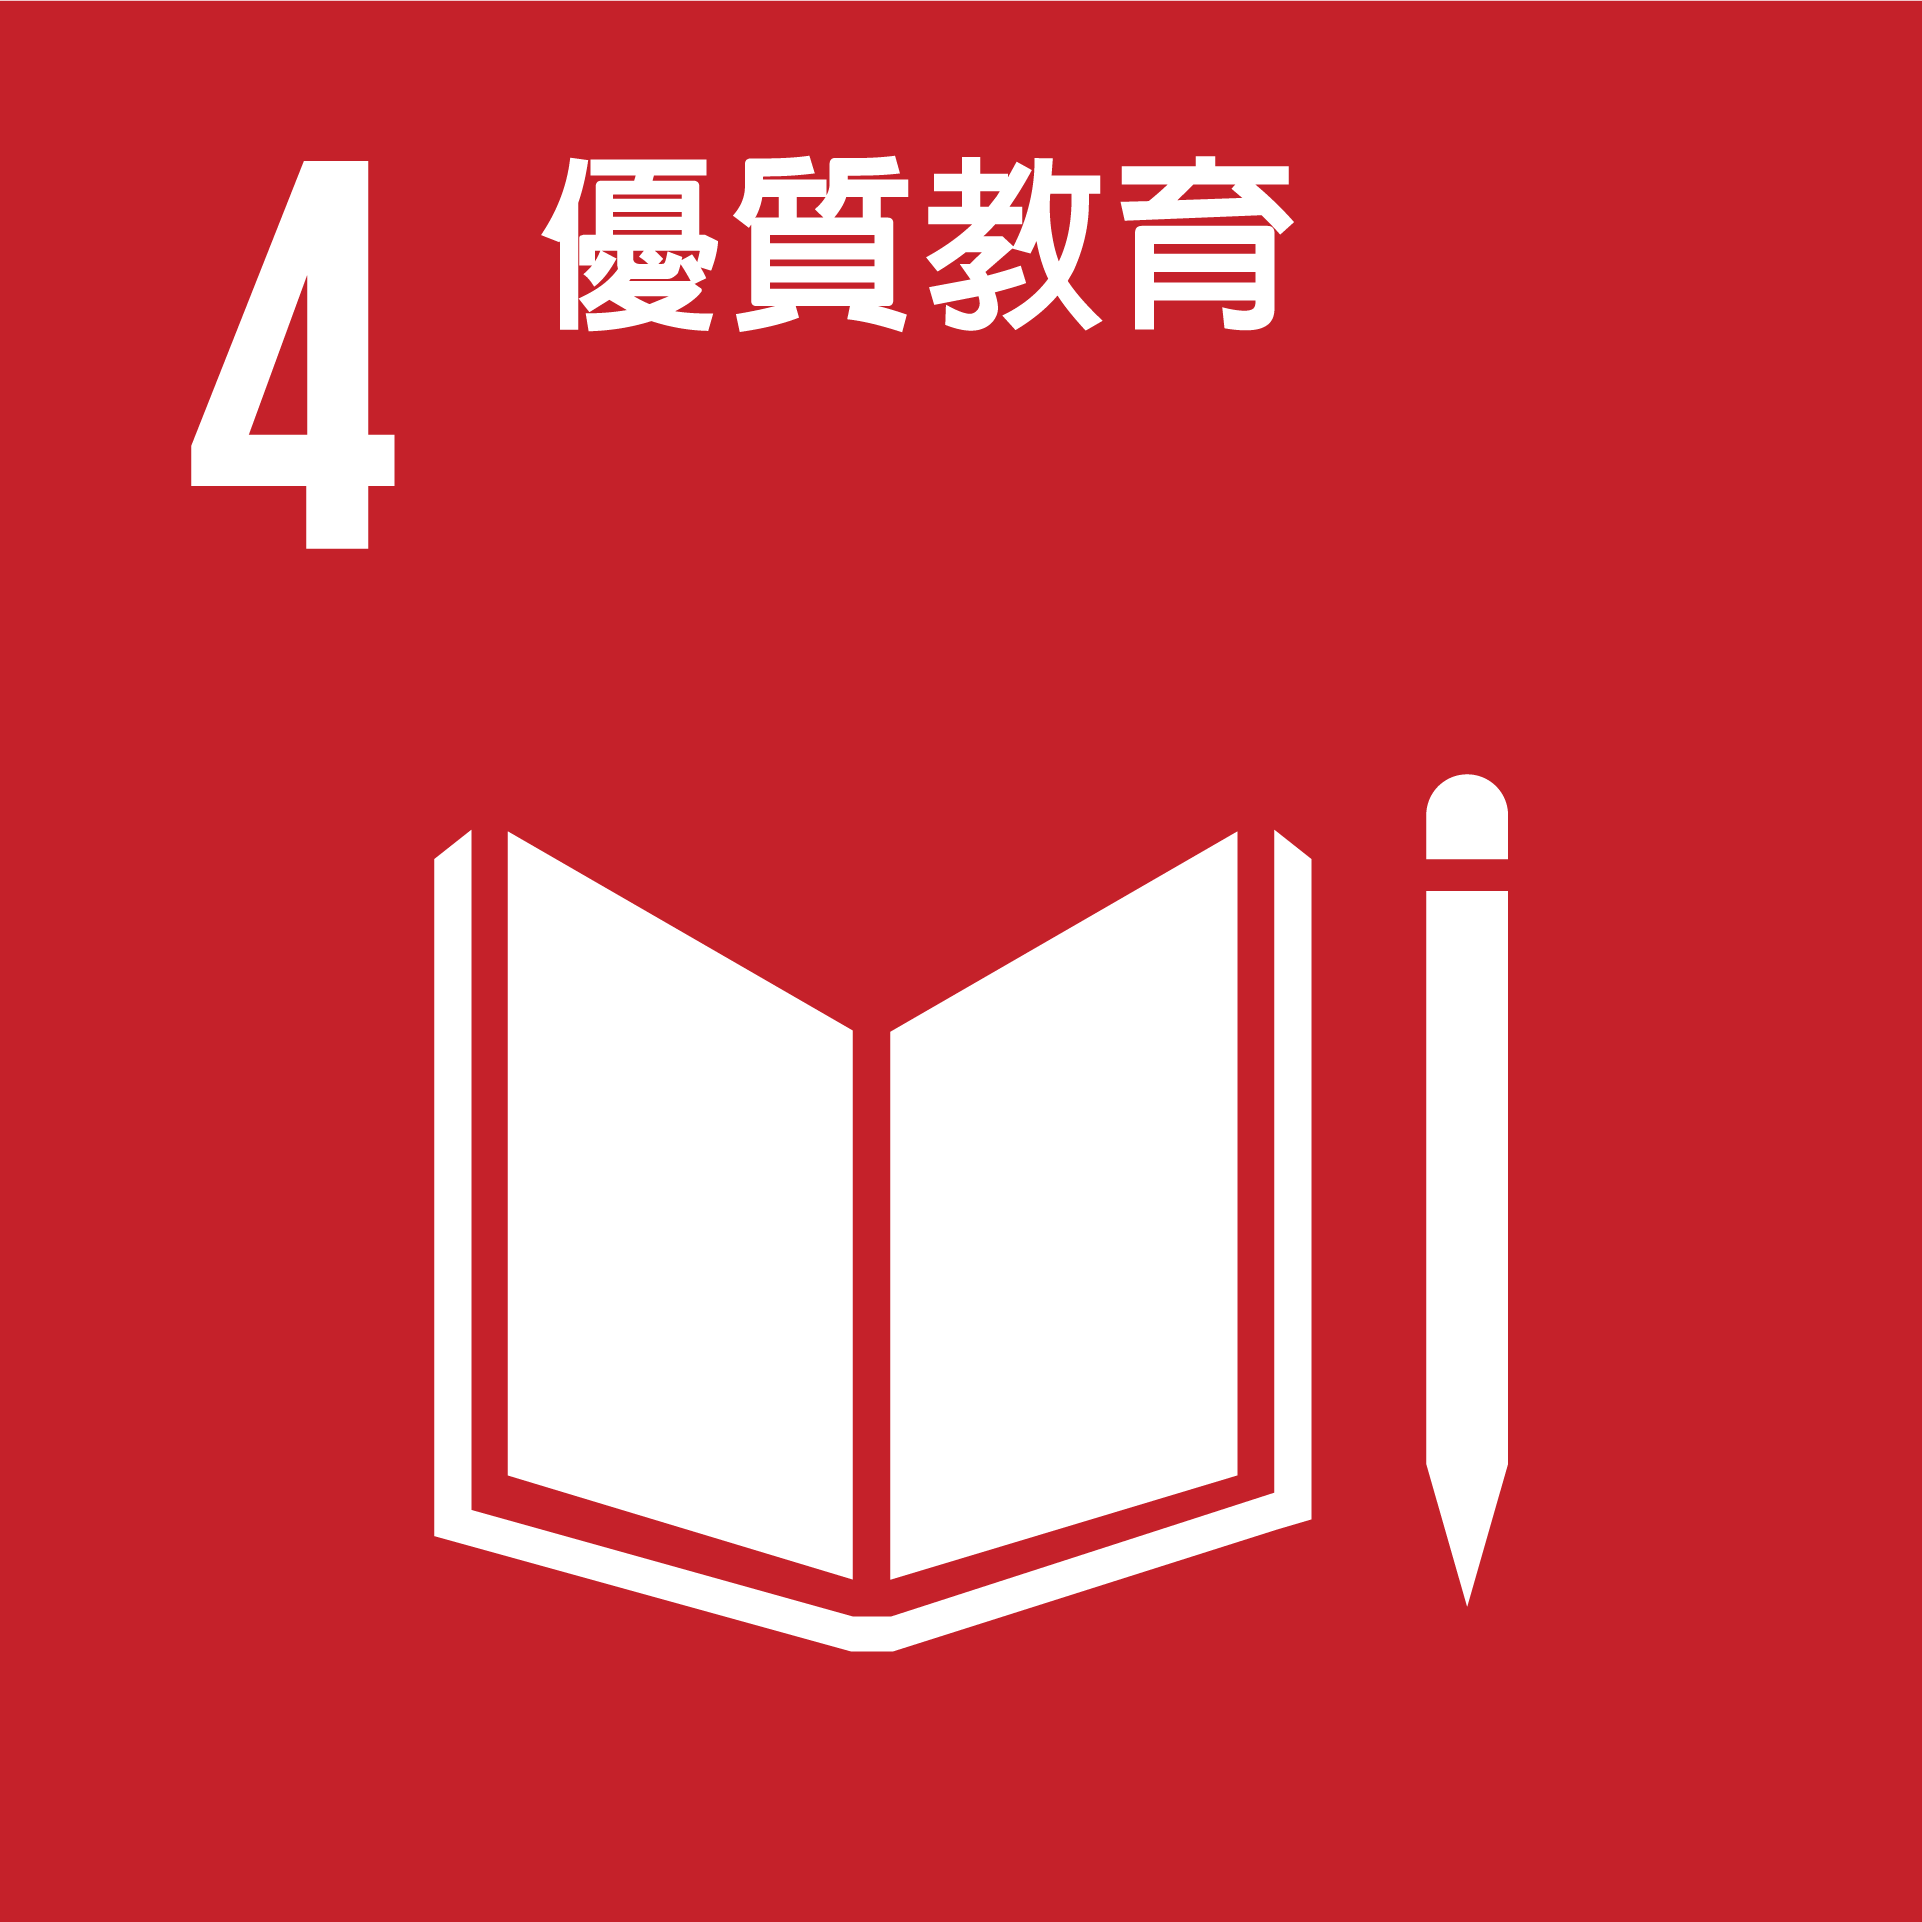 SDG vertical logo icons Chi 04